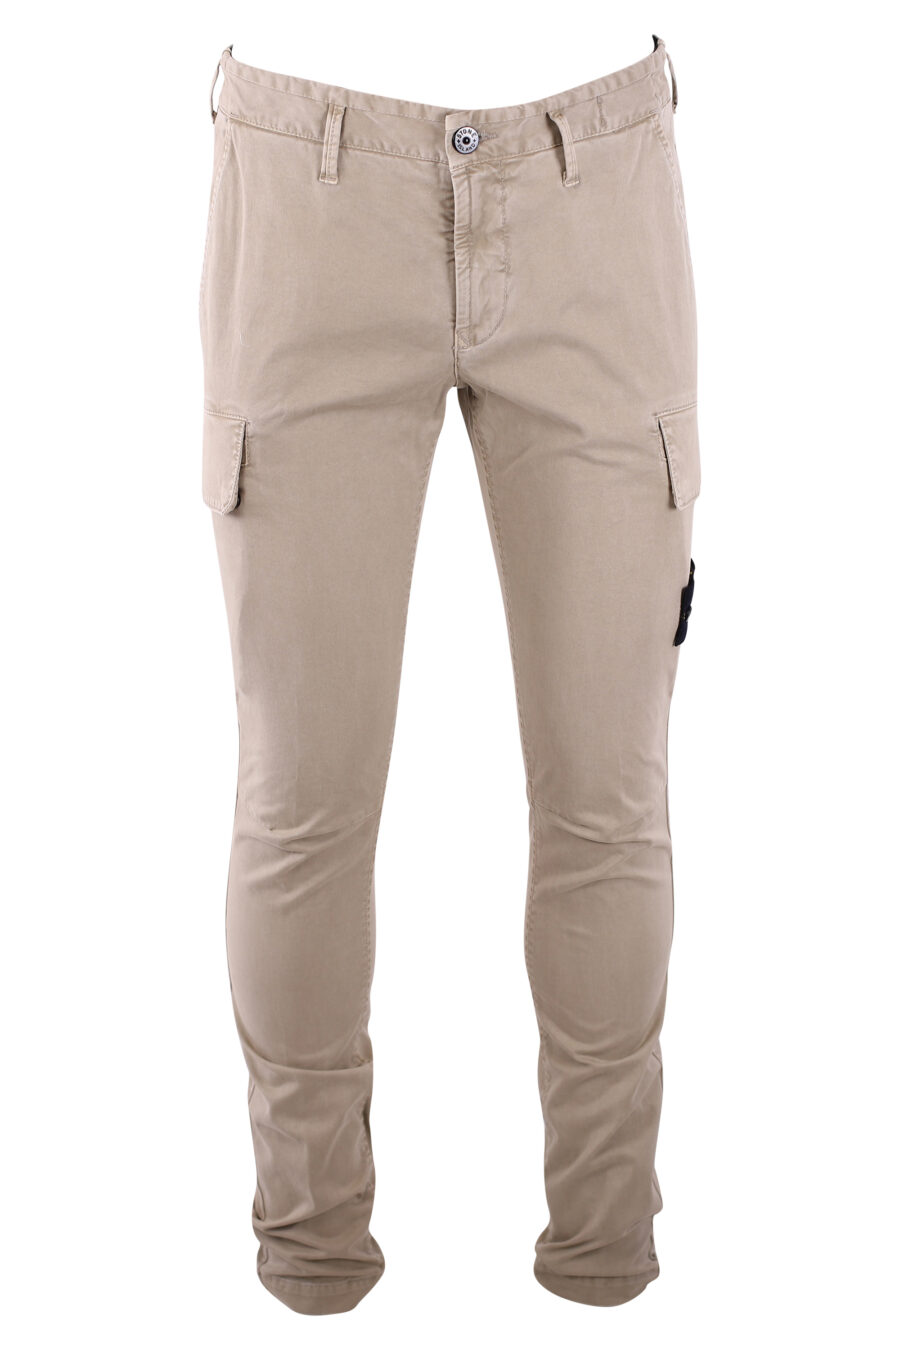 Stone Island - Pantalón beige con bolsillos laterales y parche - BLS Fashion